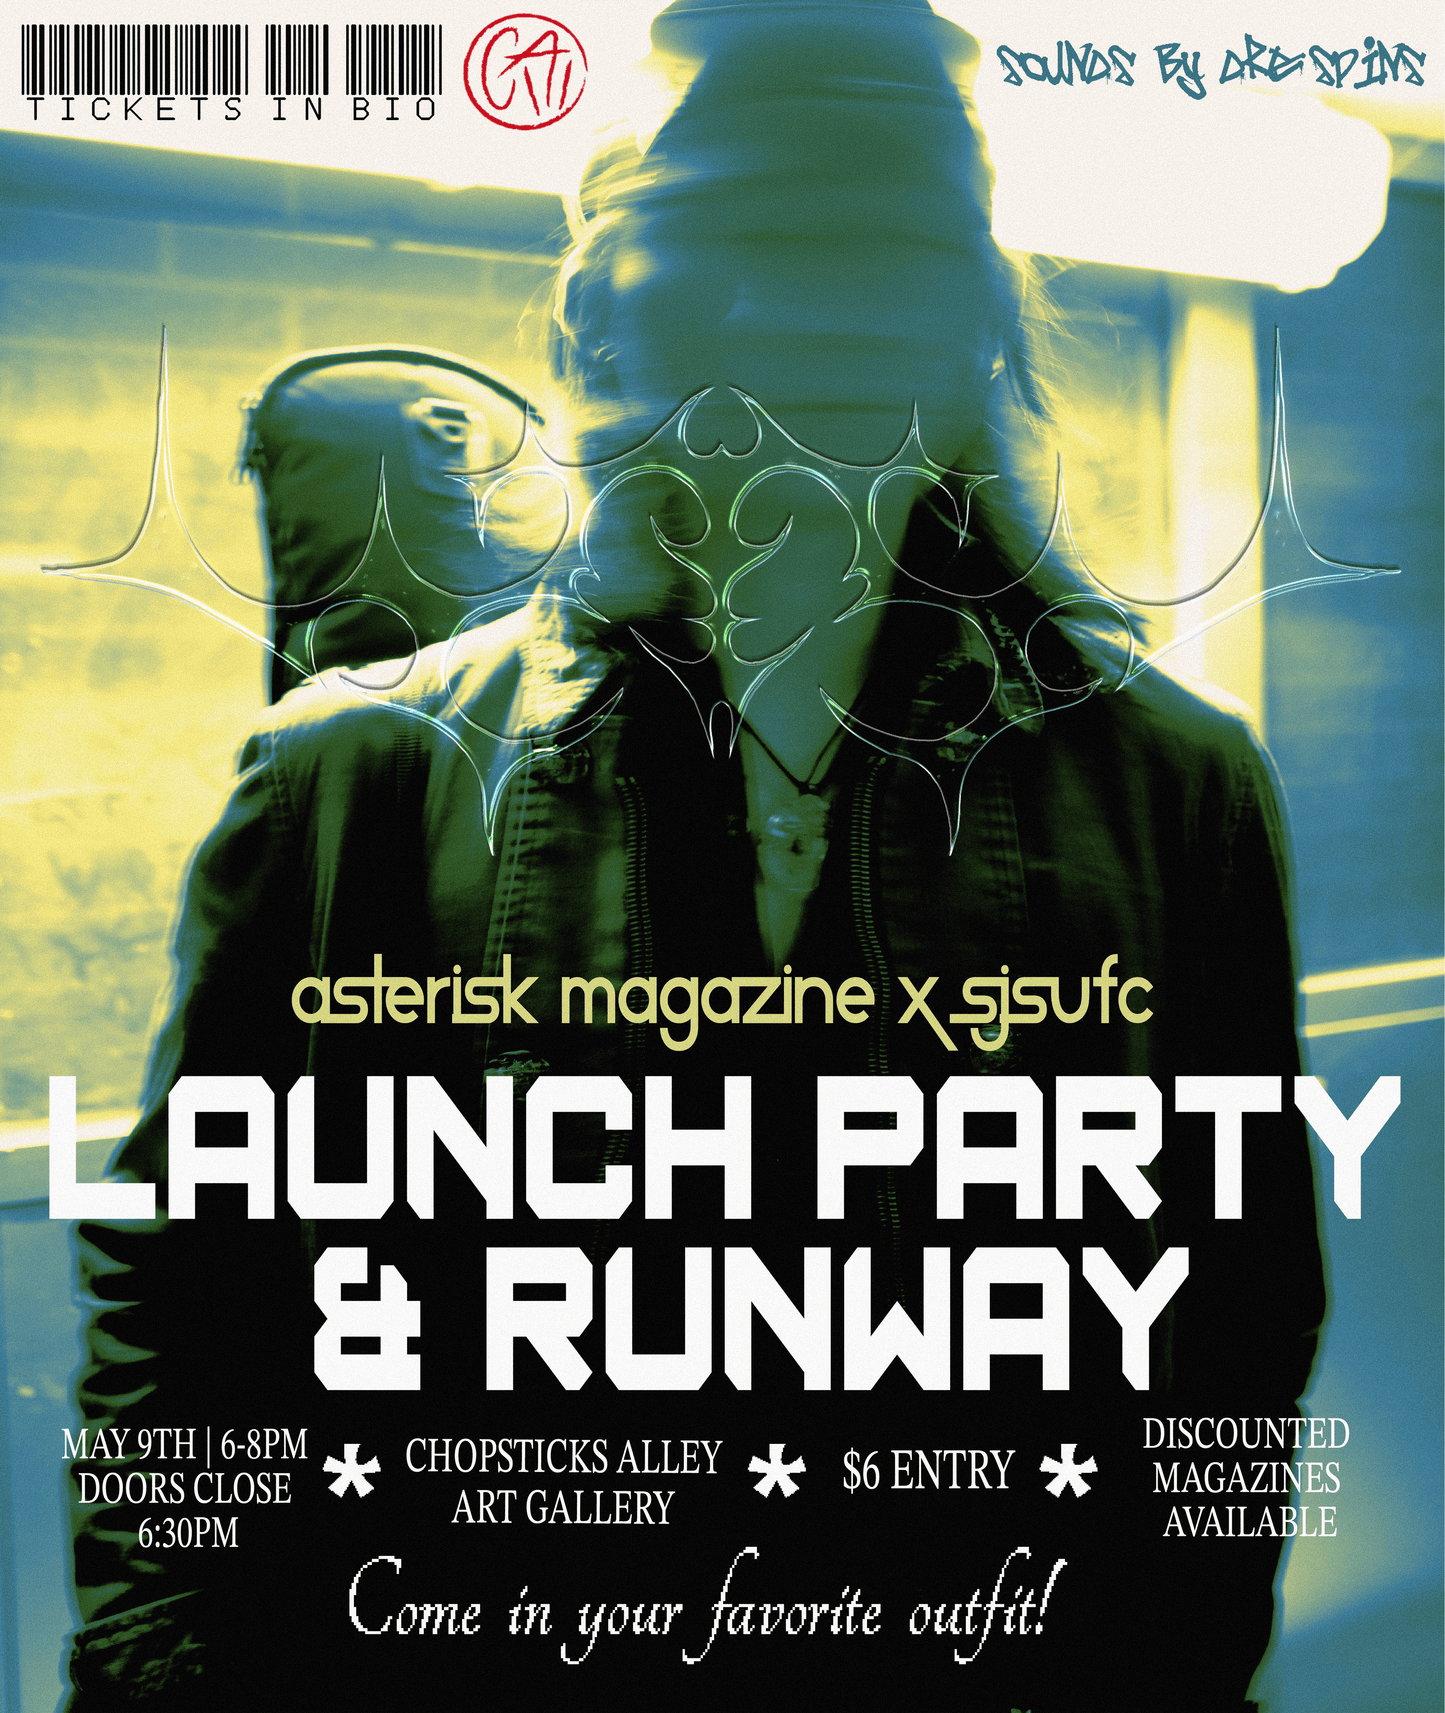 Launch Party/Runway Ticket